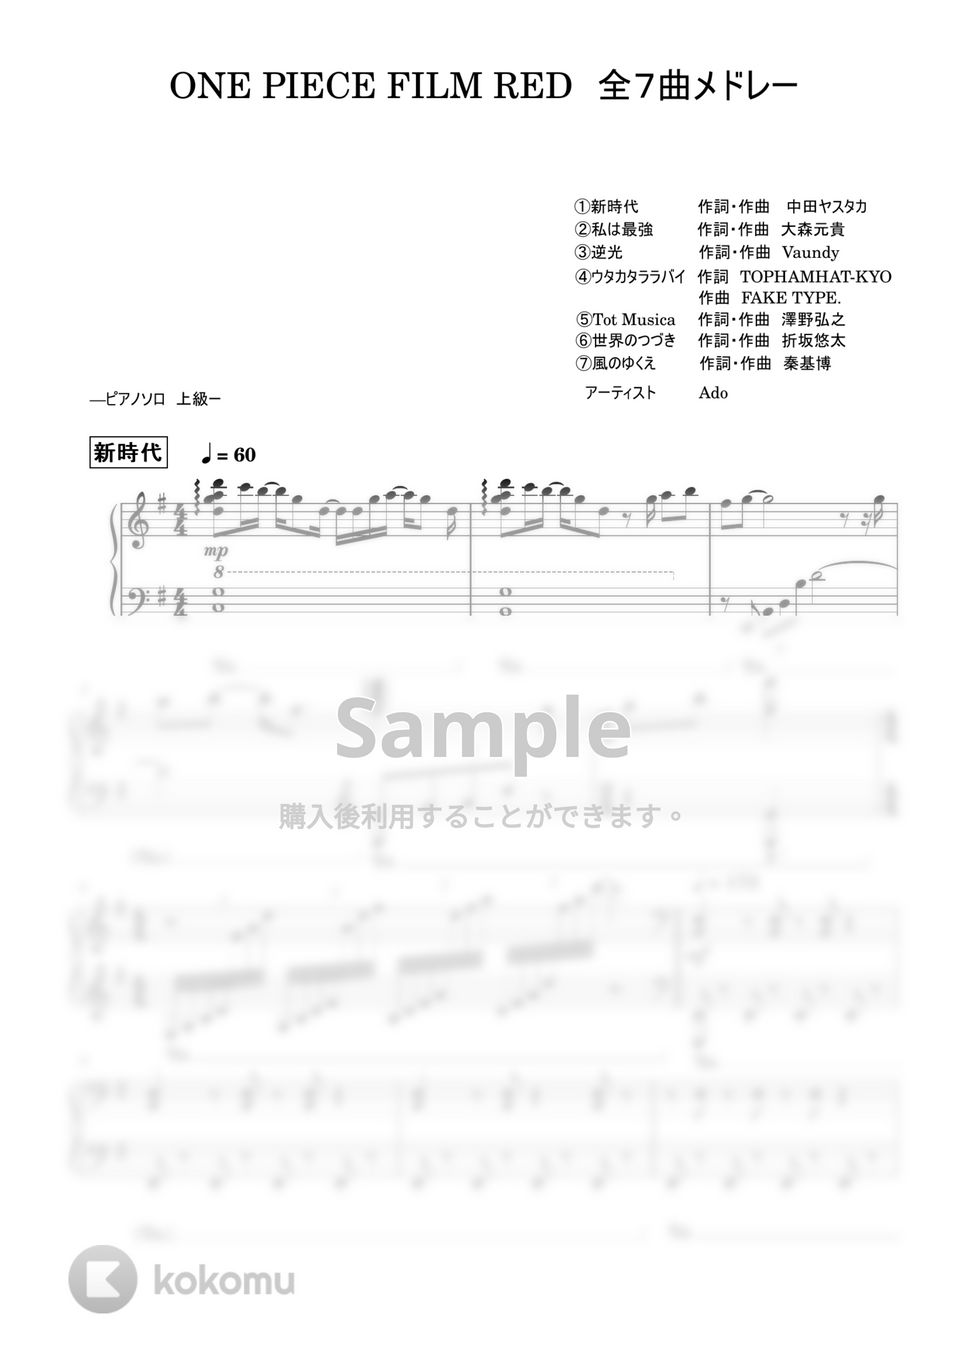 Ado - ONE PIECE FILM RED全７曲メドレー (上級レベル) by Saori8Piano